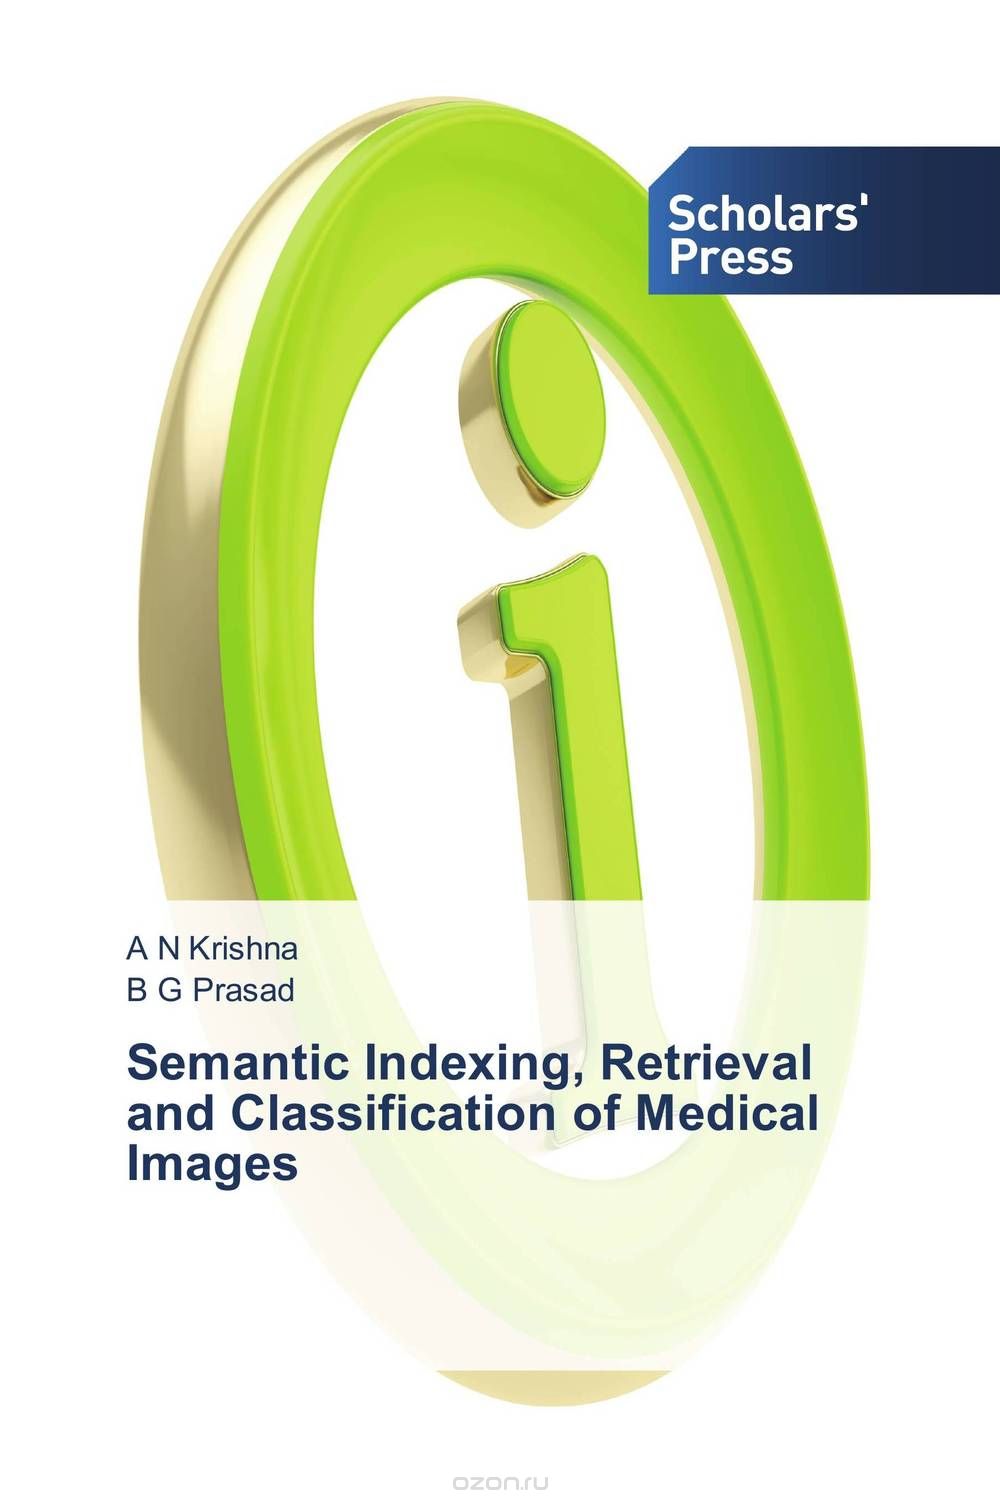 Скачать книгу "Semantic Indexing, Retrieval and Classification of Medical Images"